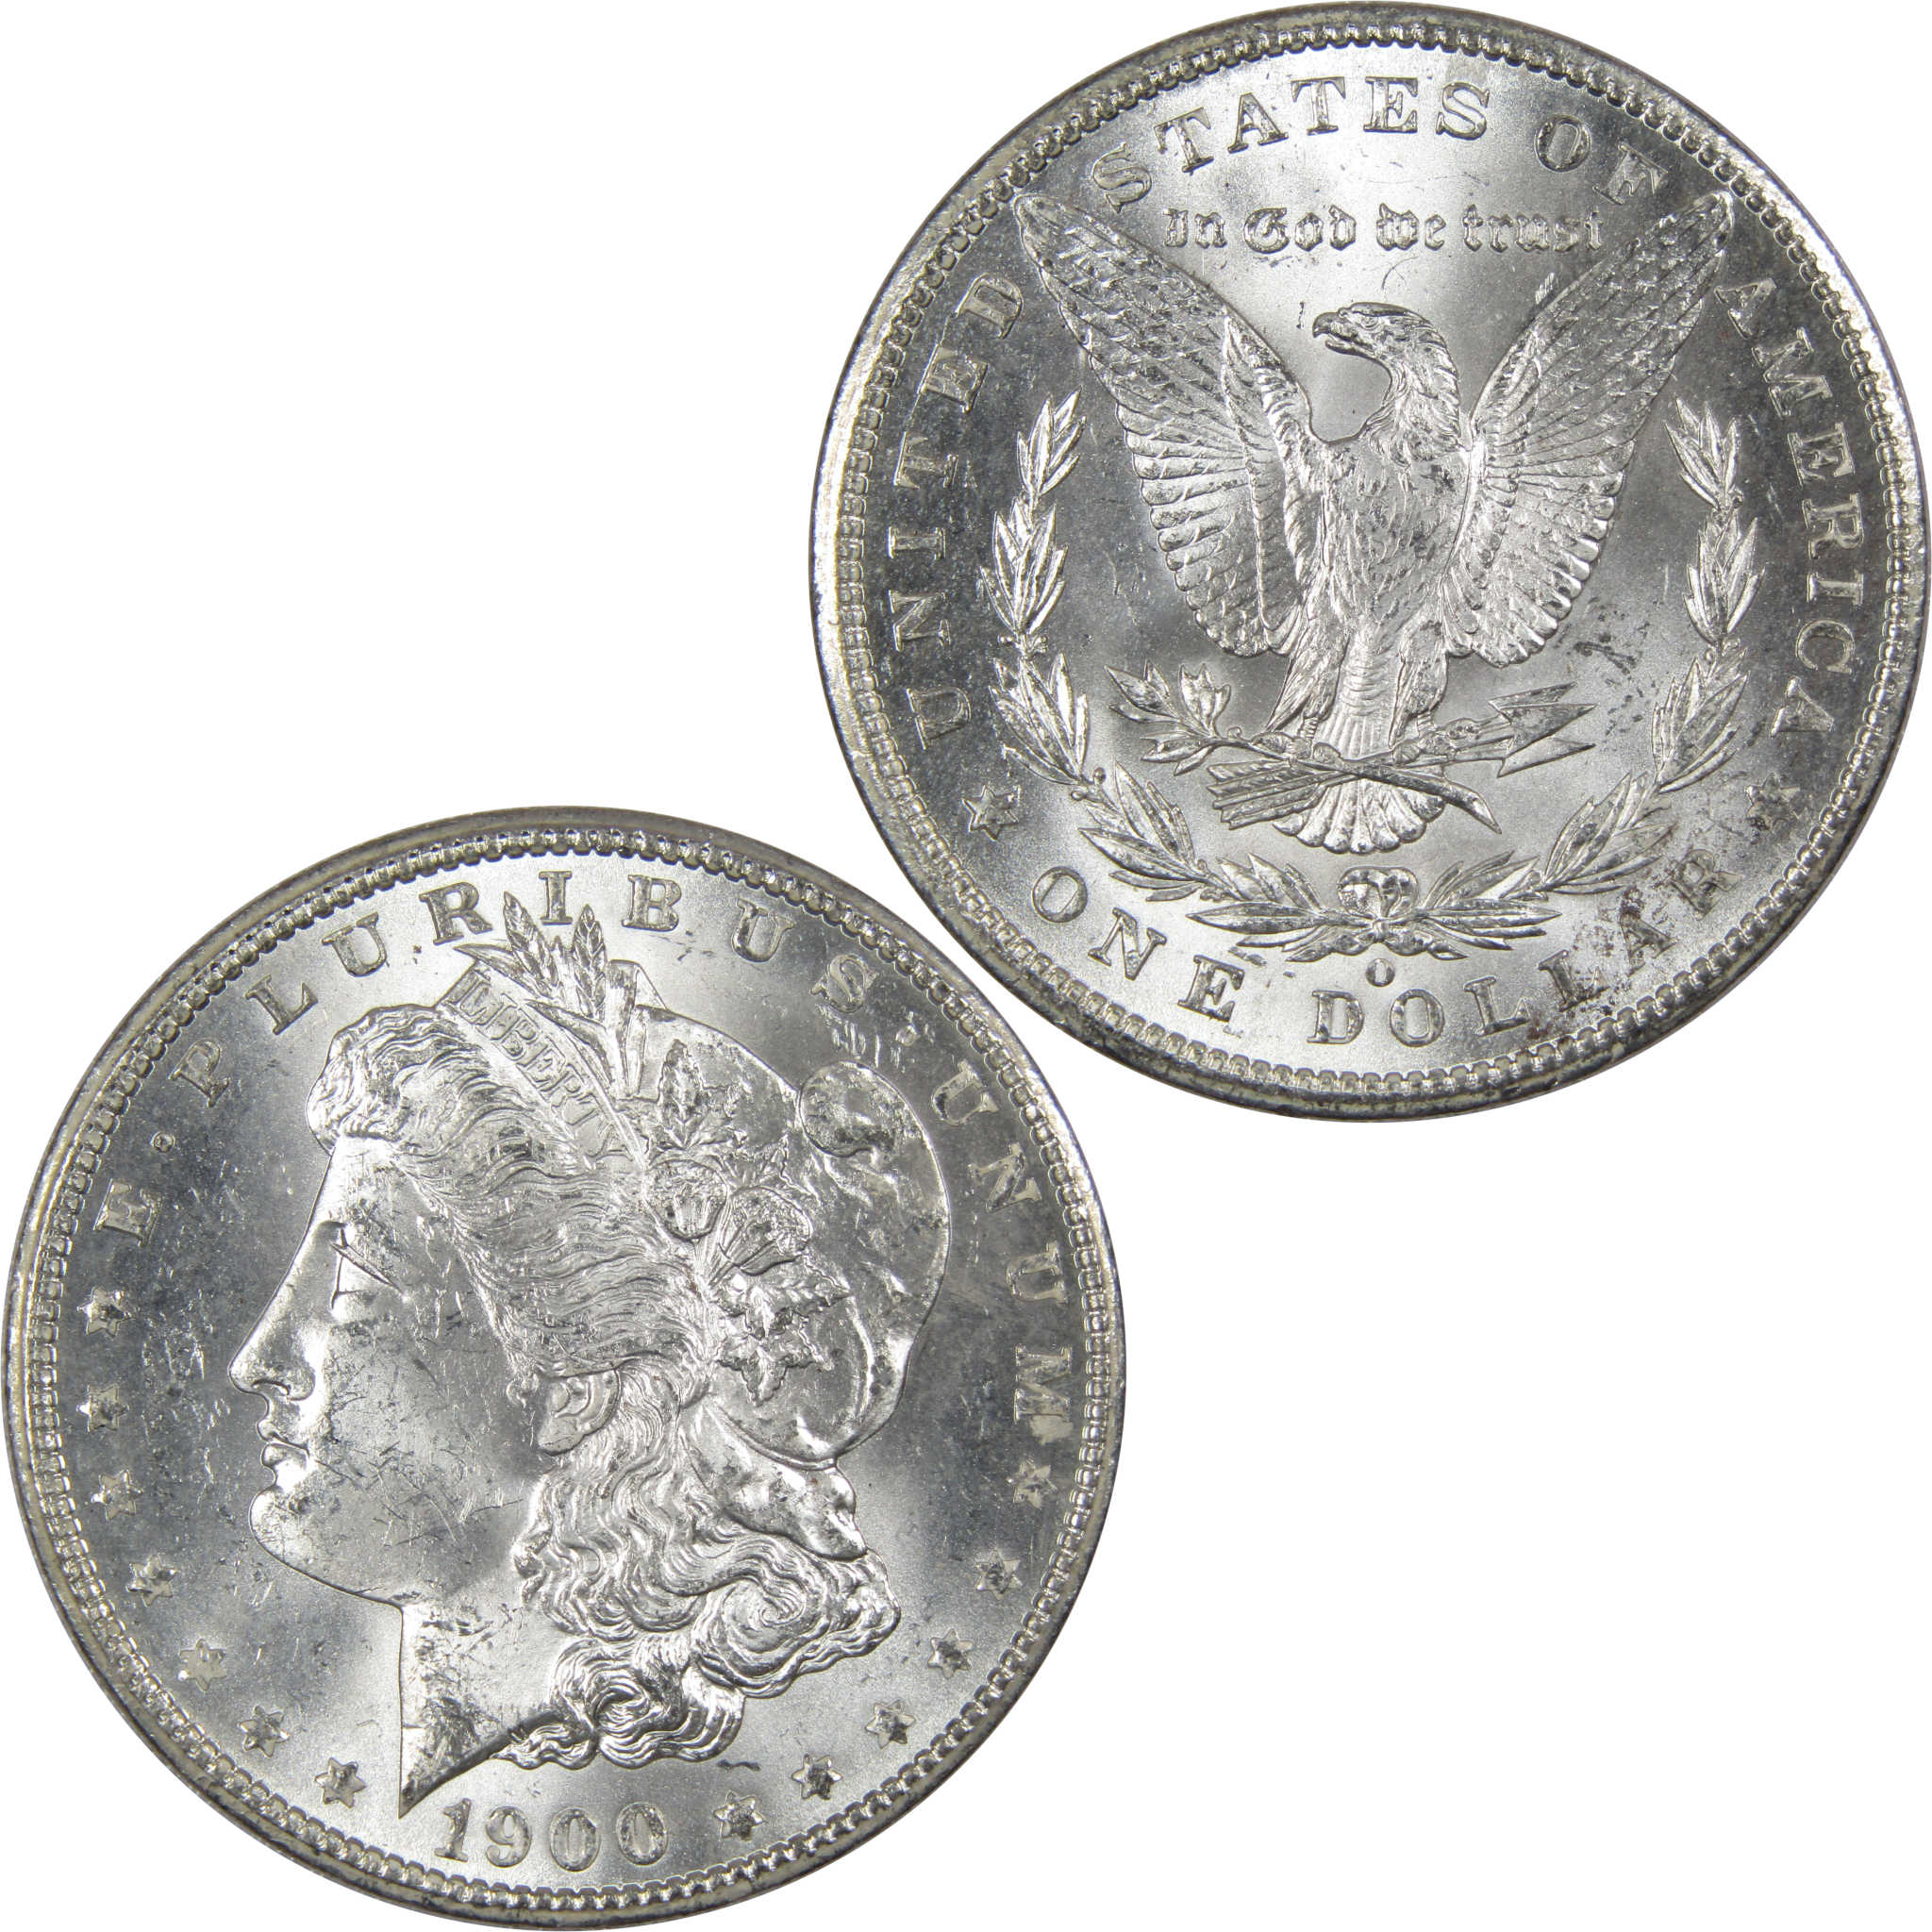 1900 O Morgan Dollar BU Uncirculated Mint State 90% Silver SKU:IPC9786 - Morgan coin - Morgan silver dollar - Morgan silver dollar for sale - Profile Coins &amp; Collectibles